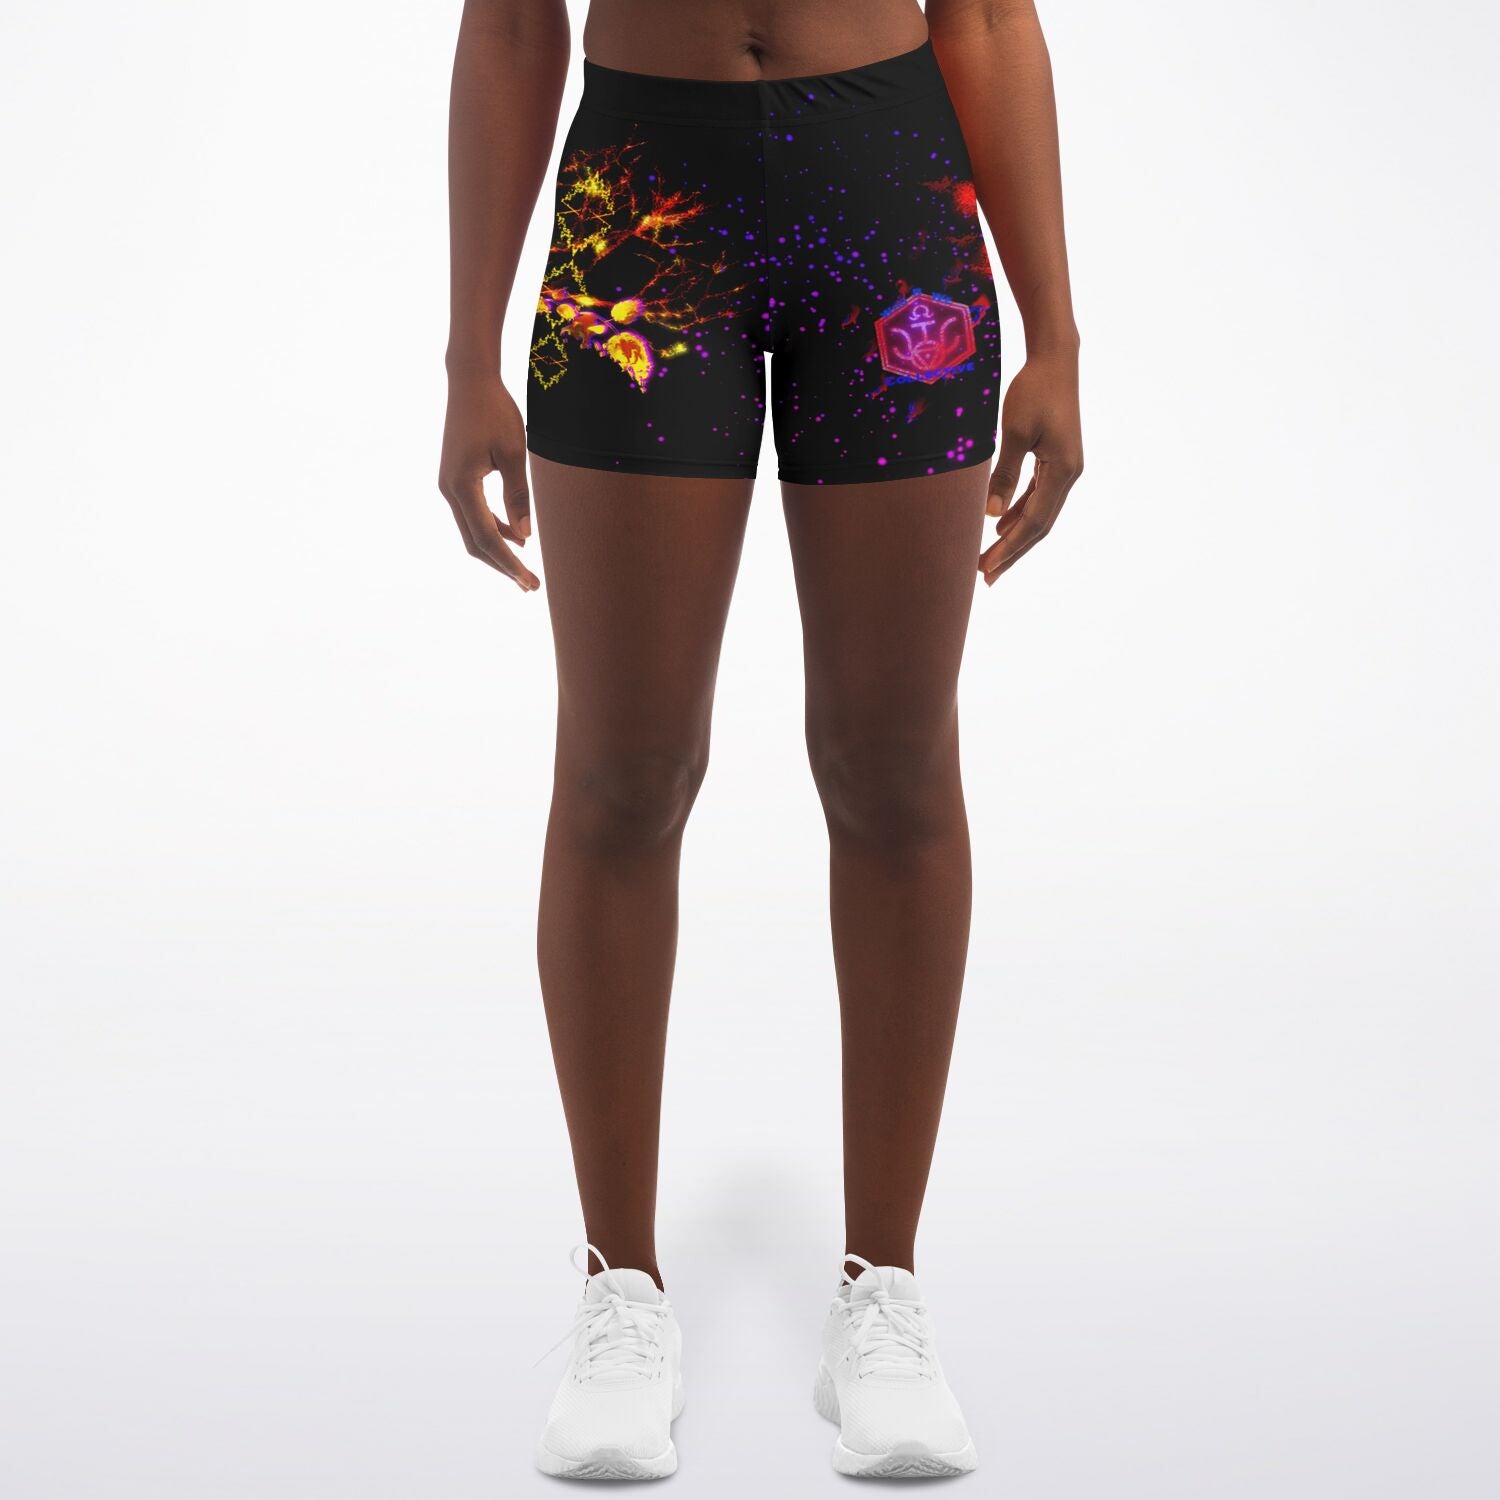 Taiga-Zoku  (Prototype Line) "Amber Cosmic Blaze" Legging Shorts - Who R We Collective